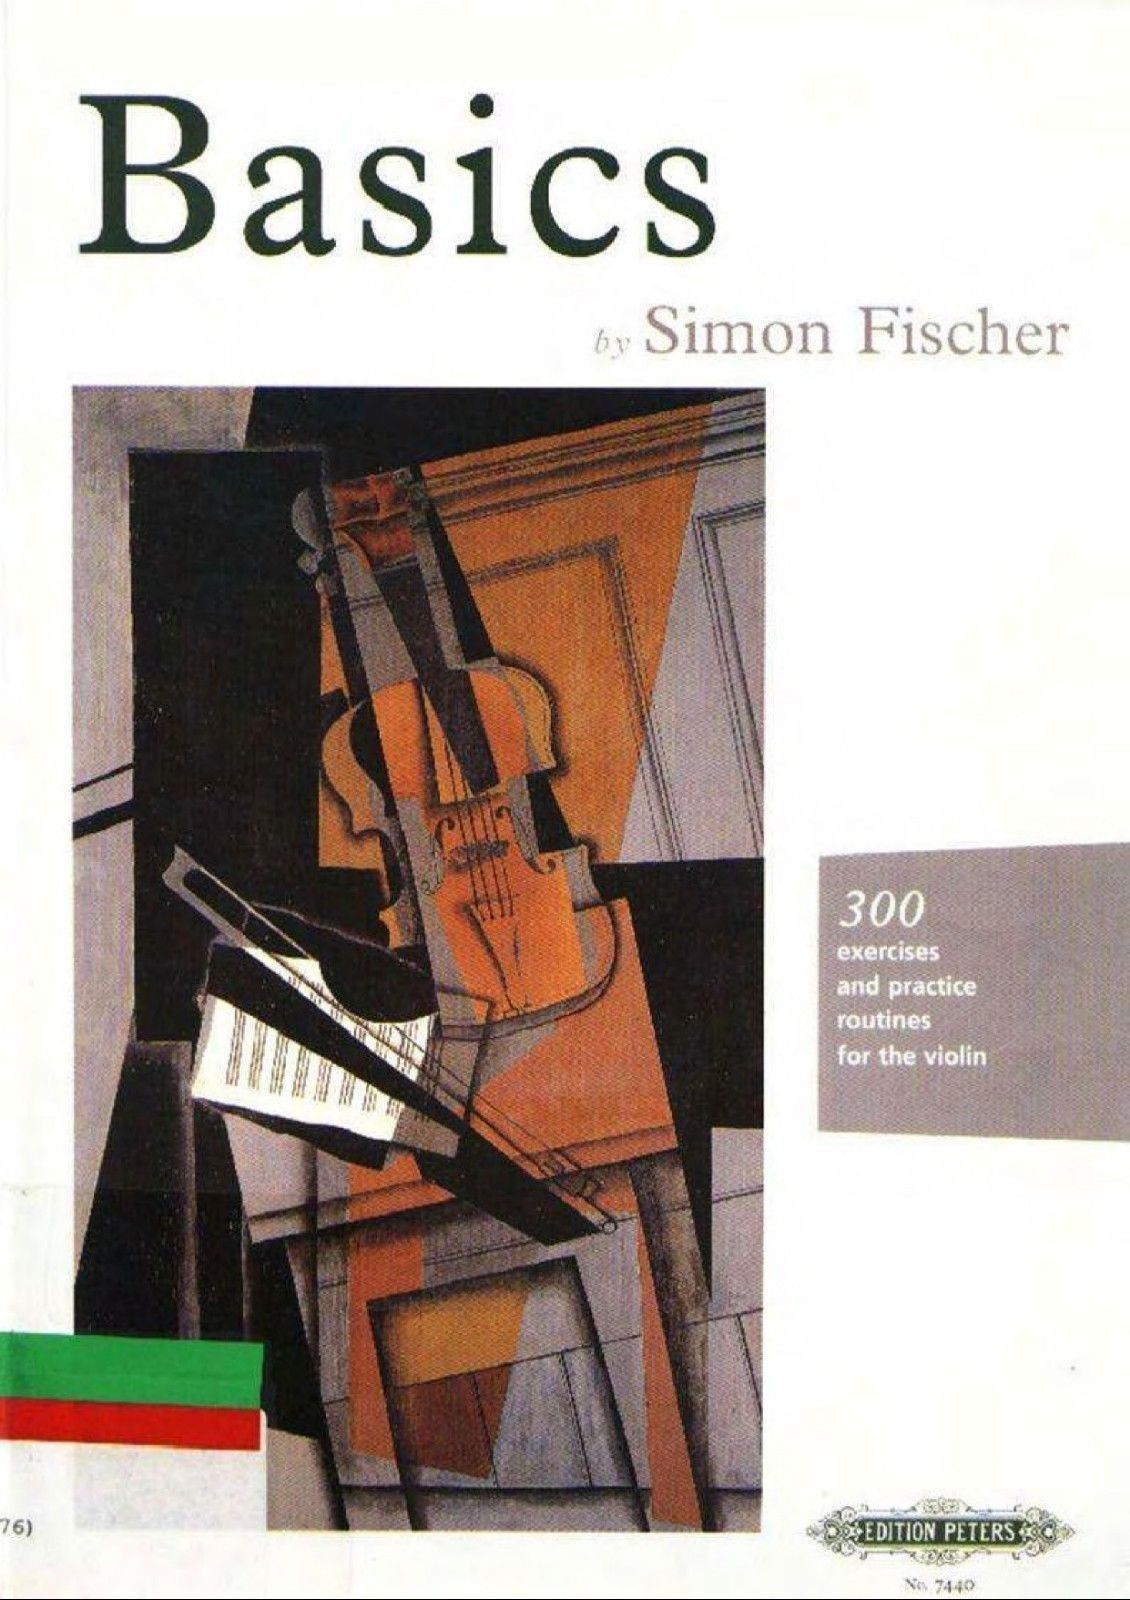 simon fischer basics ebook download